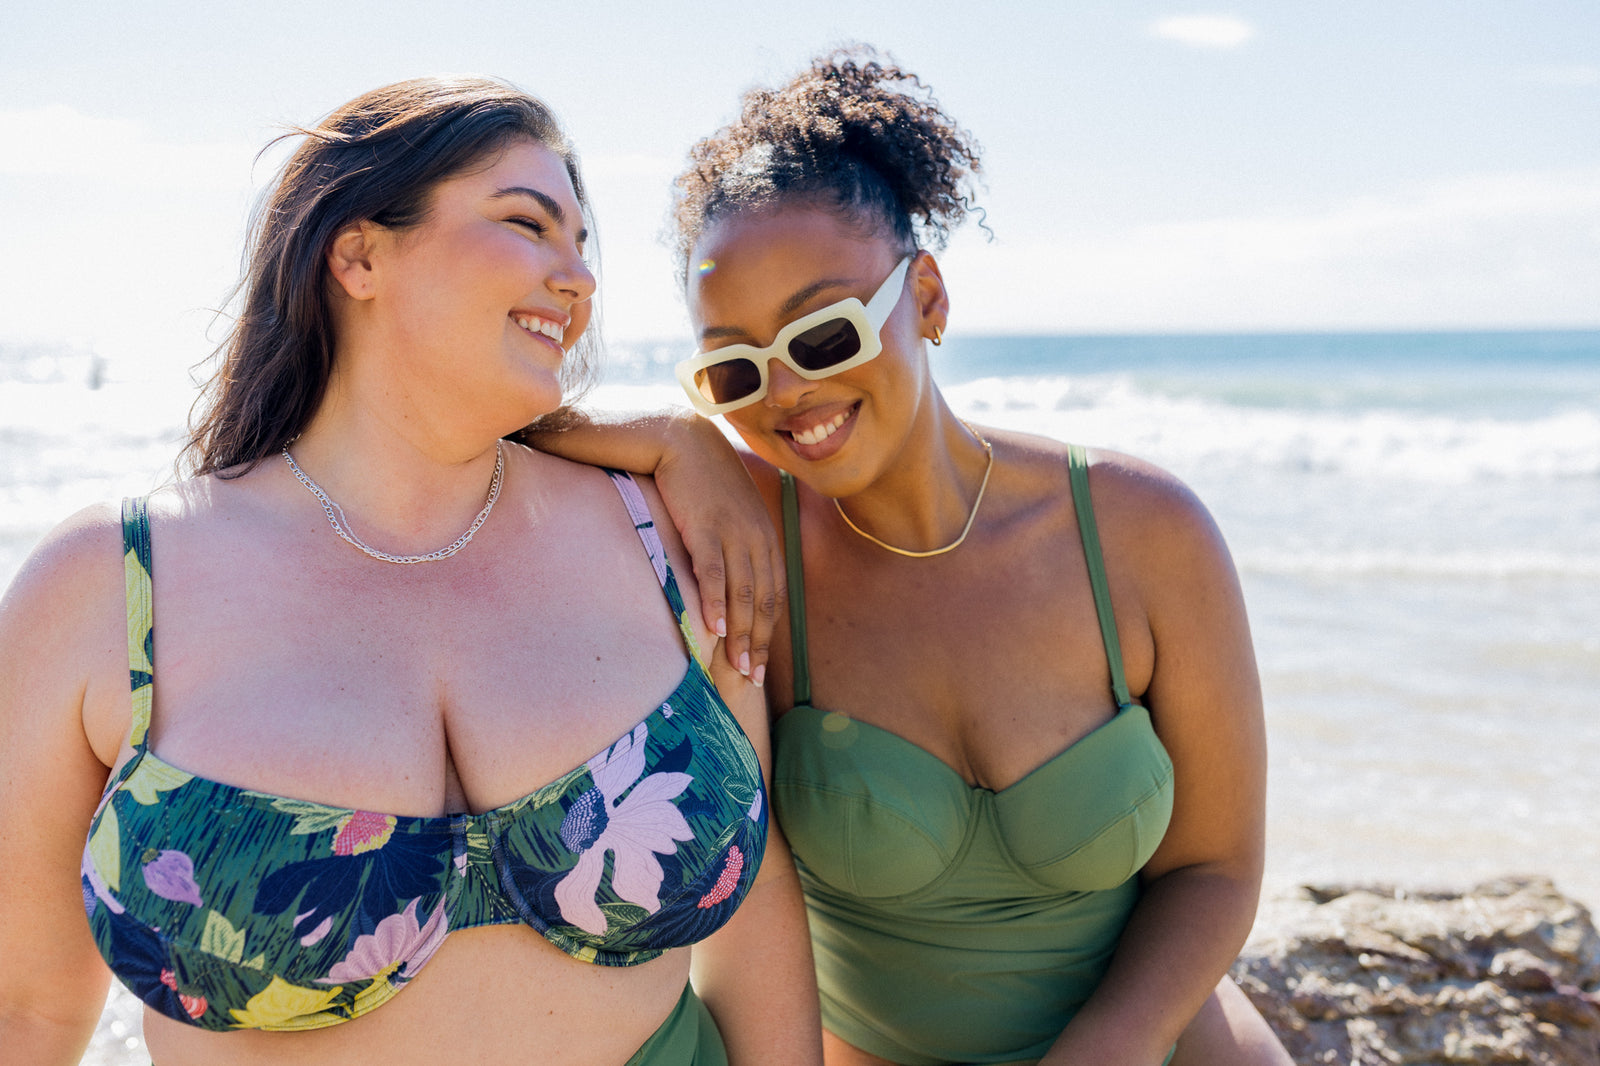 The 'underboob' bikini trend returns to Australian beaches - but